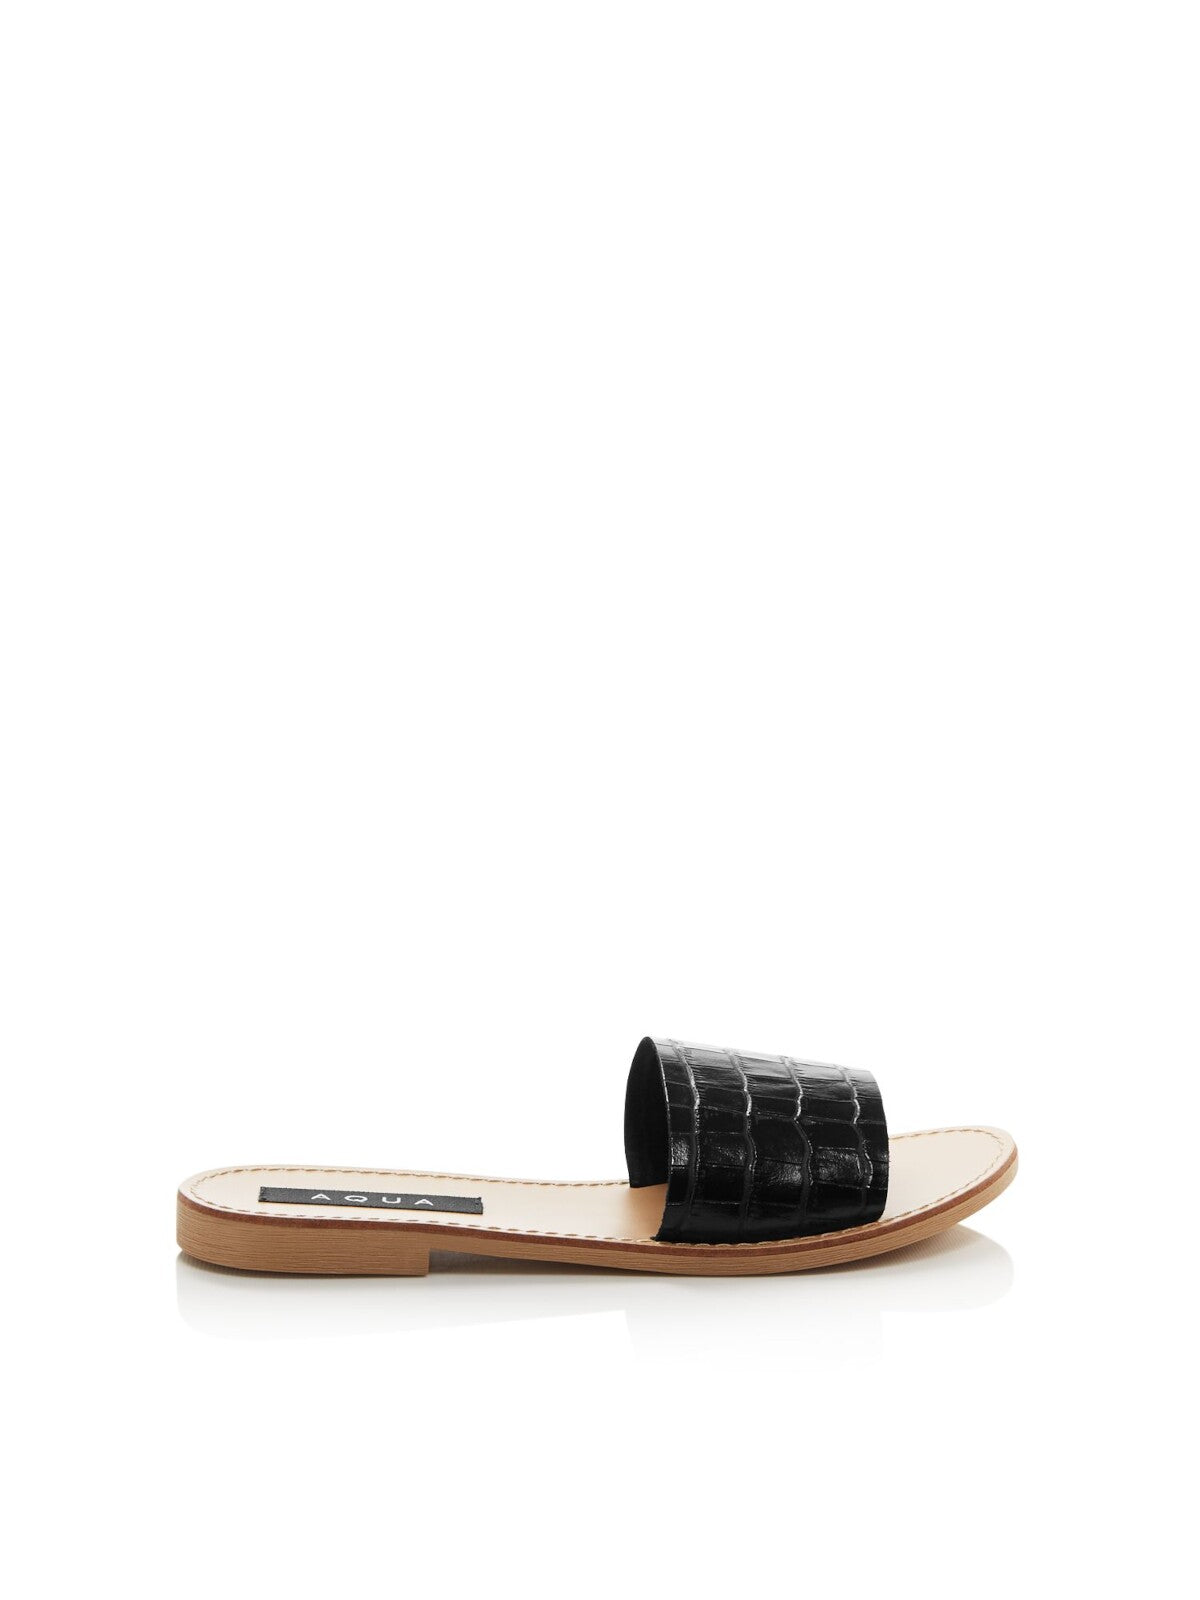 AQUA Womens Black Croc Embossed Slide Round Toe Block Heel Slip On Leather Slide Sandals Shoes 6 M